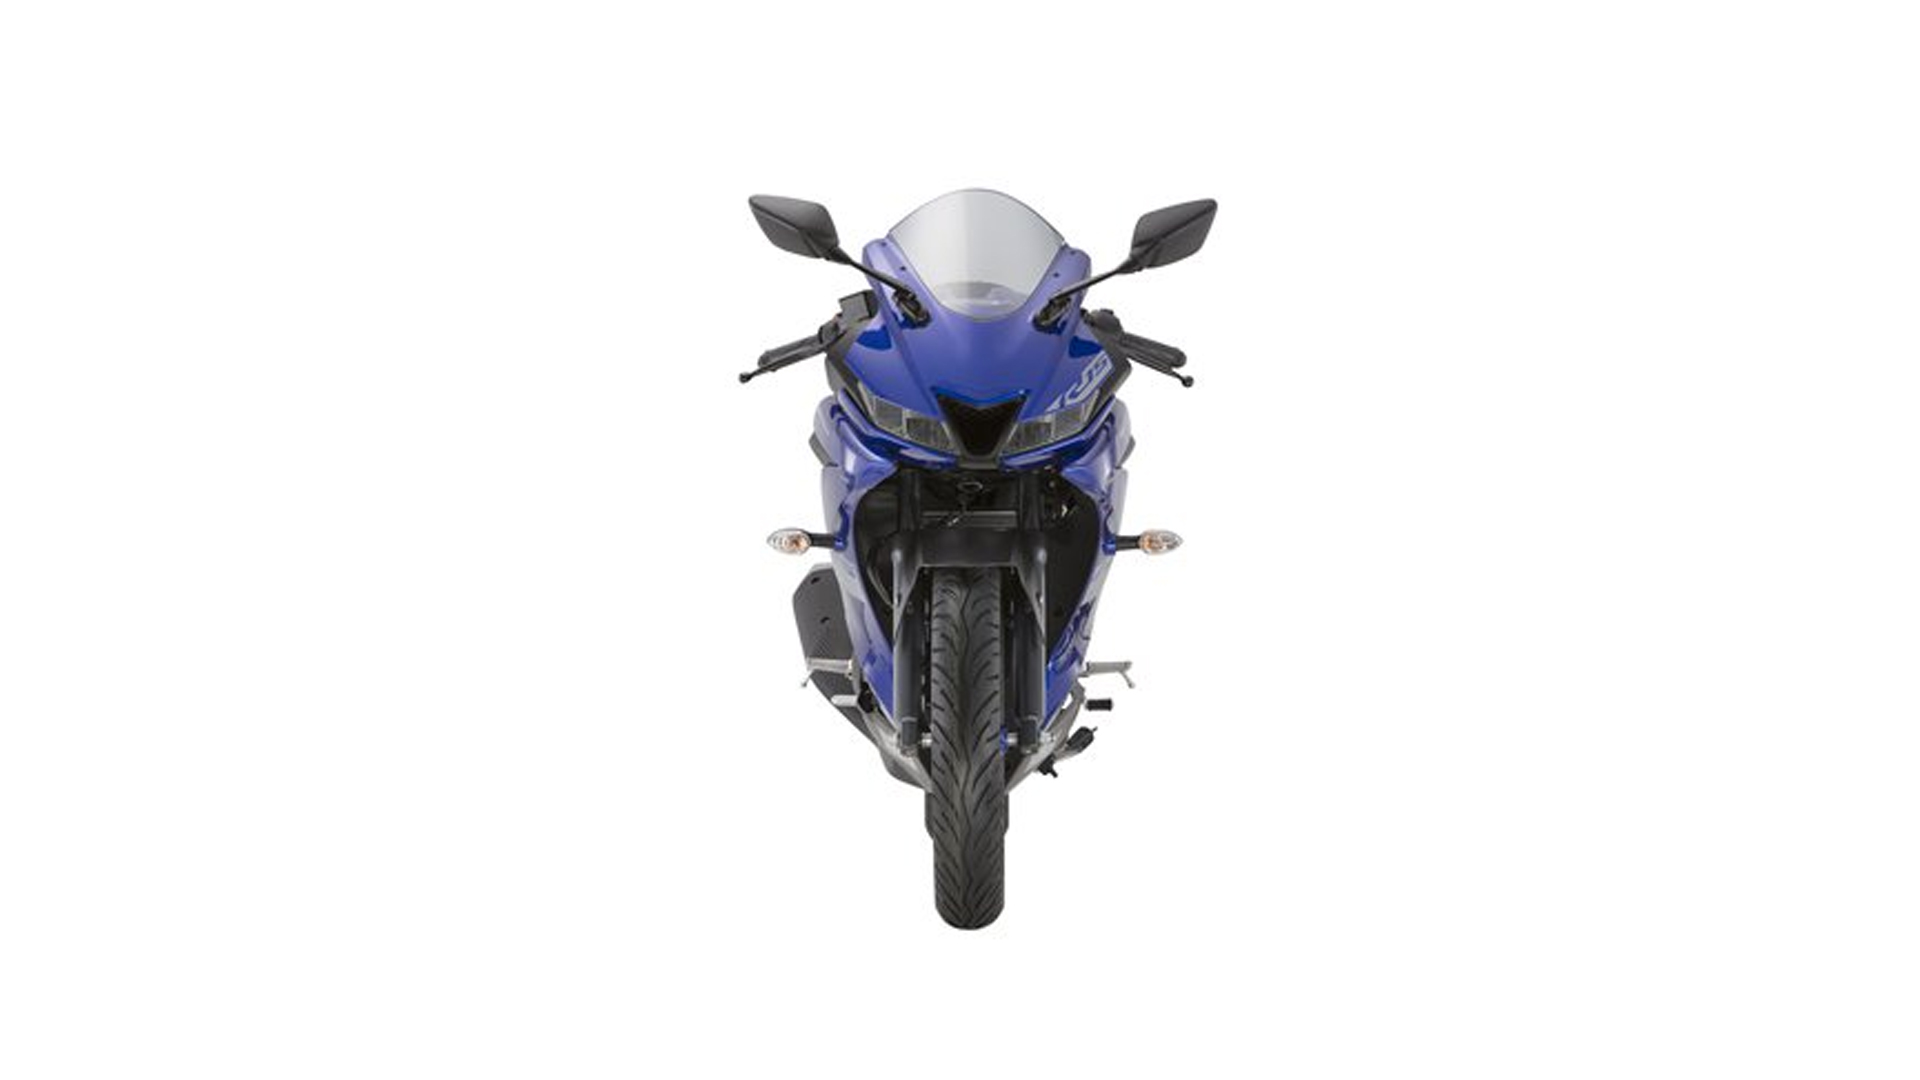 Yamaha YZF-R15 V3.0 2019 Racing Blue Bike Photos - Overdrive